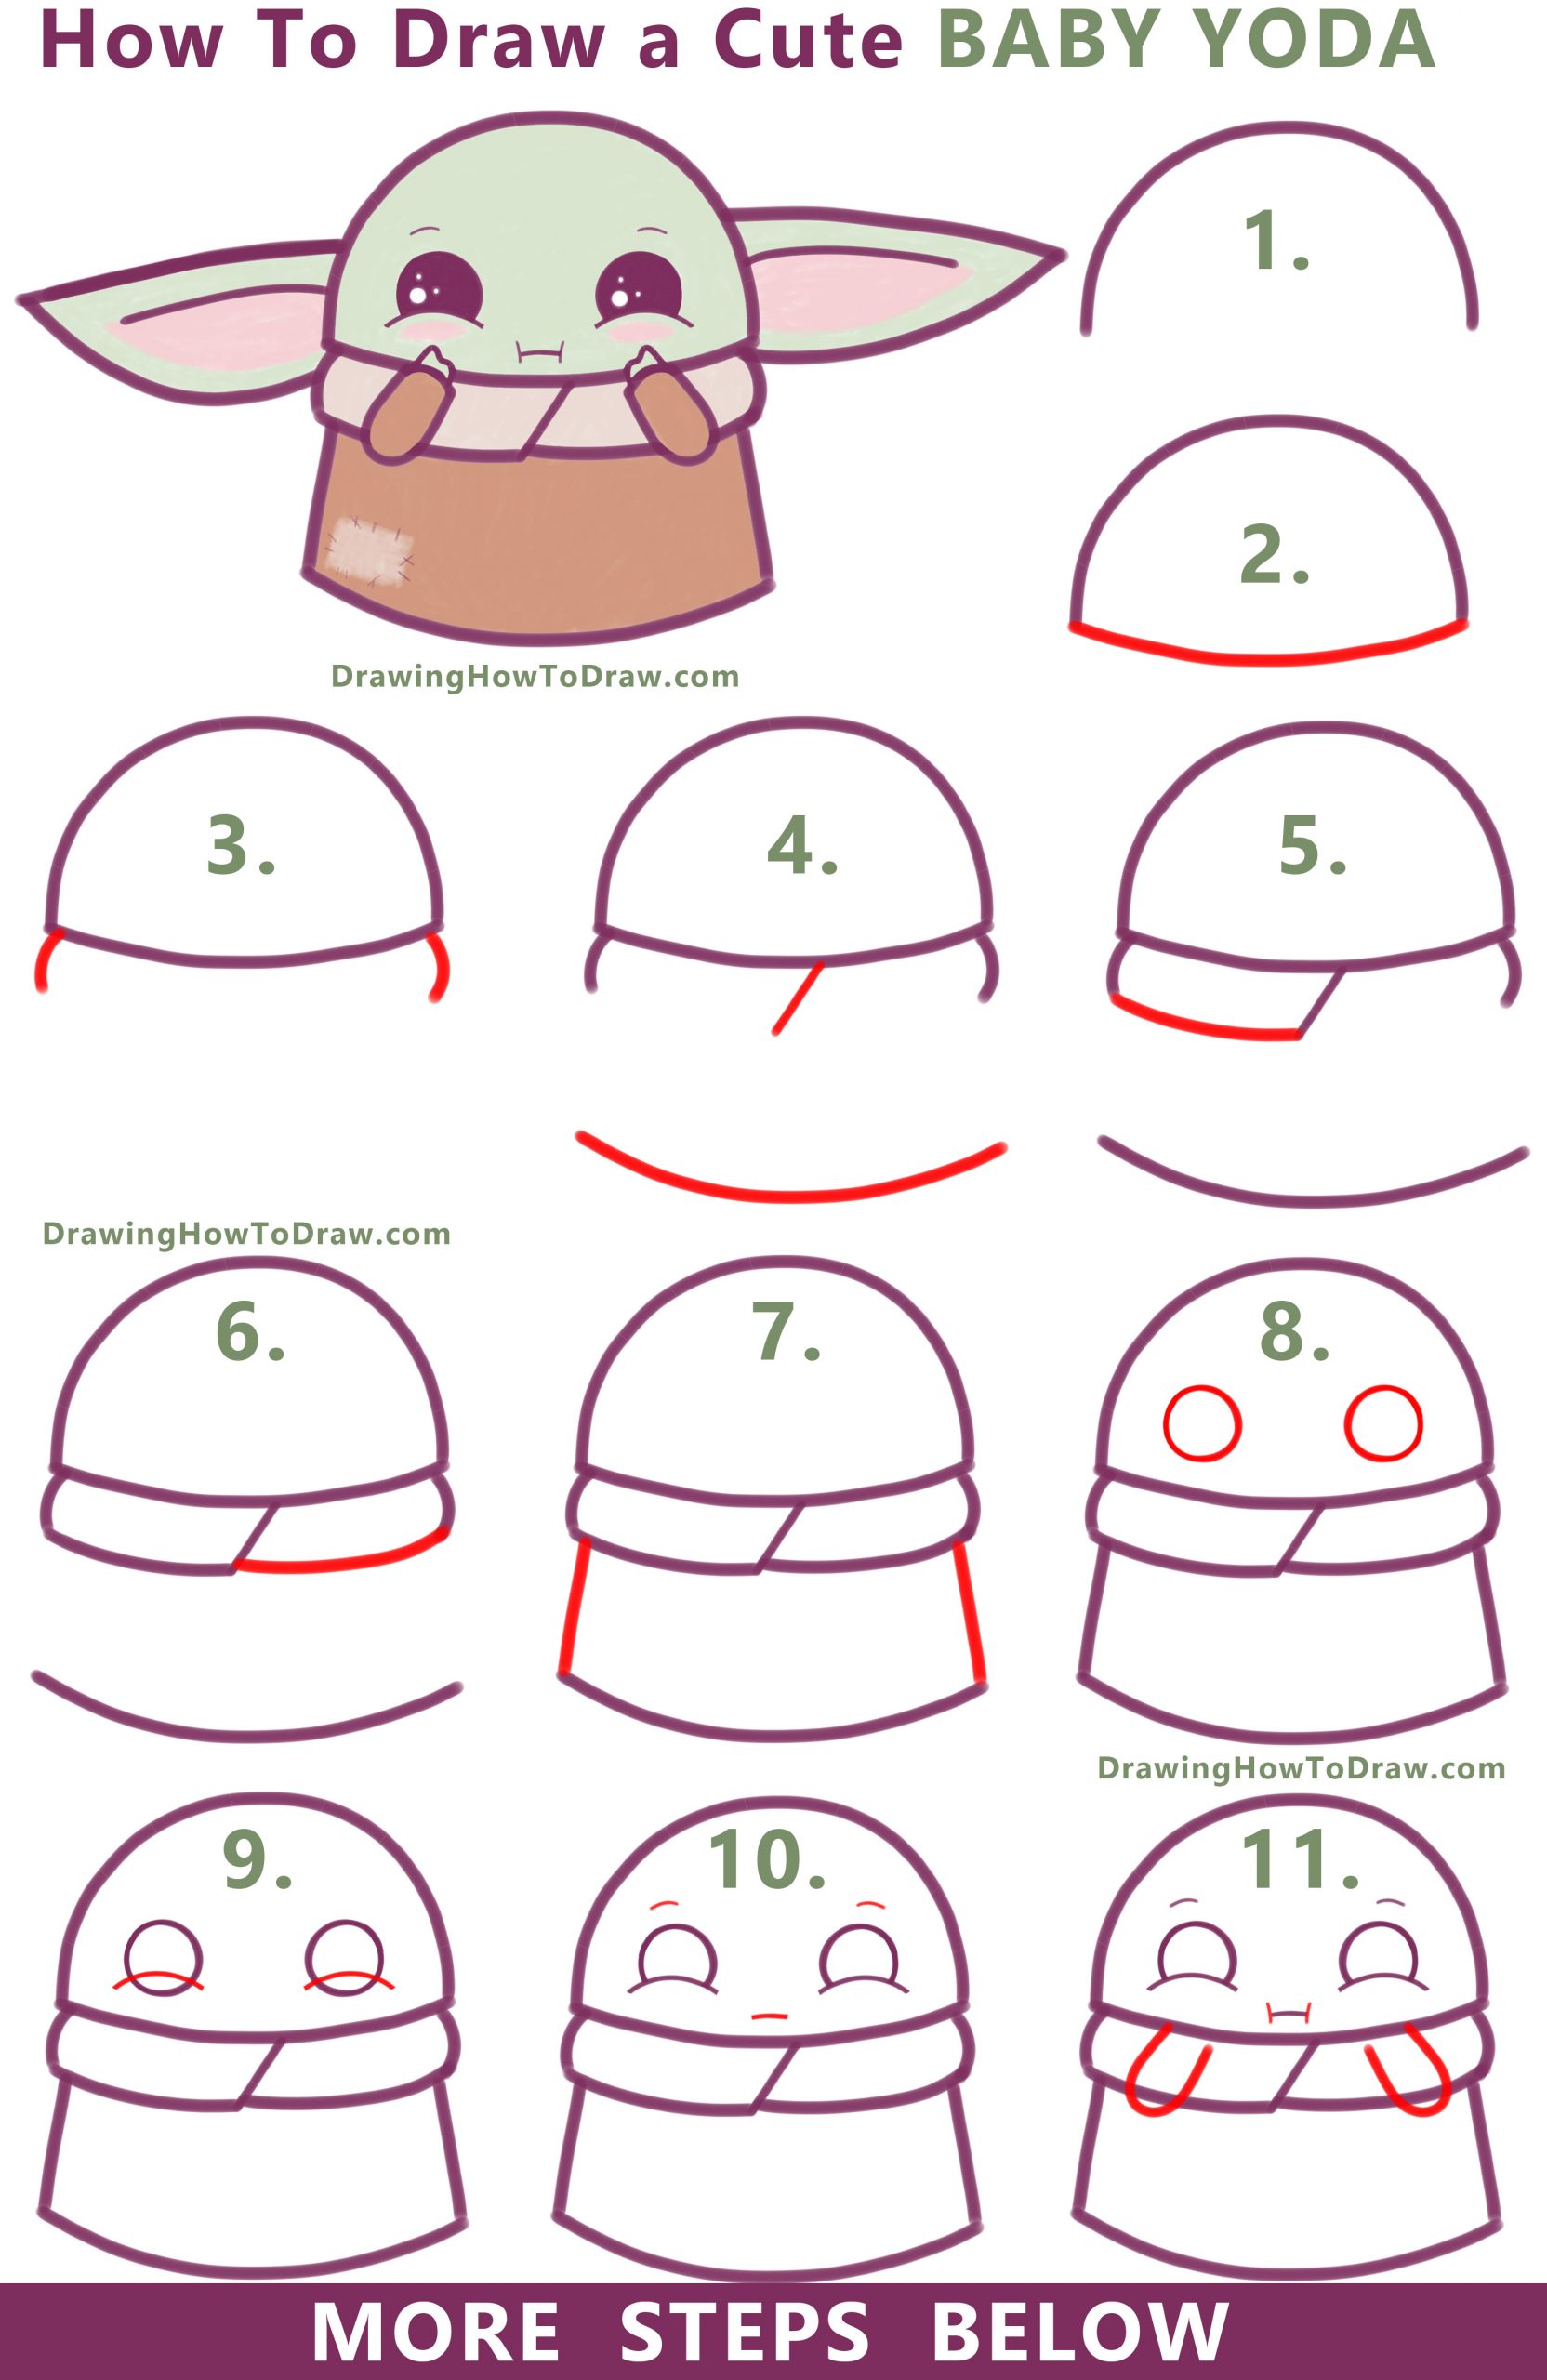 How to Draw a Cute Cartoon Baby Yoda (Kawaii / Chibi) Easy Step by ...